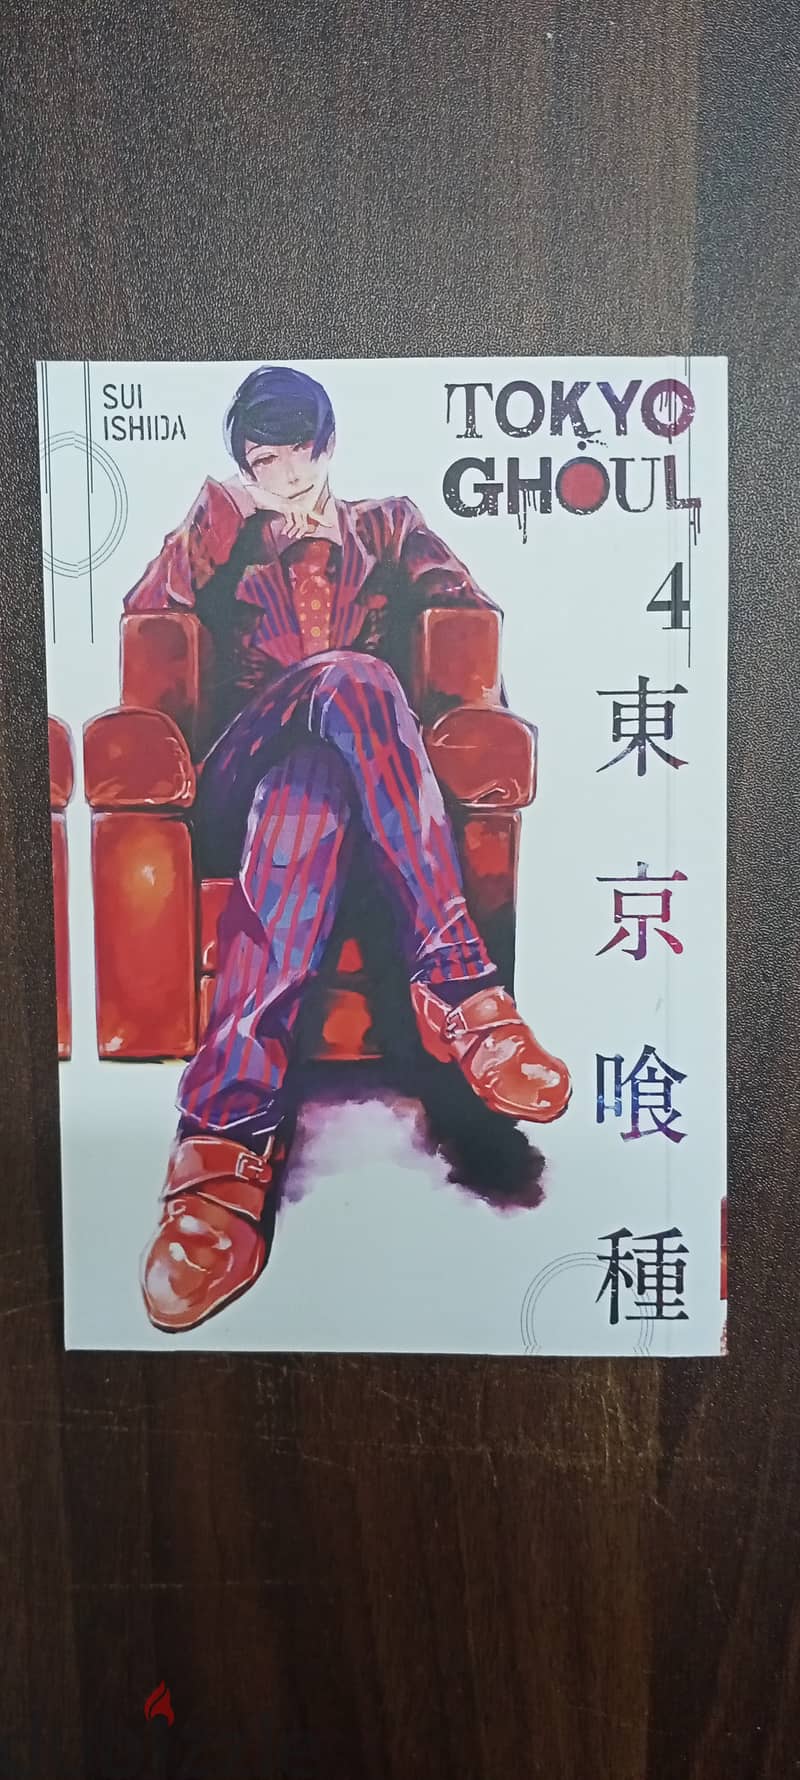 Tokyo ghoul manga 0